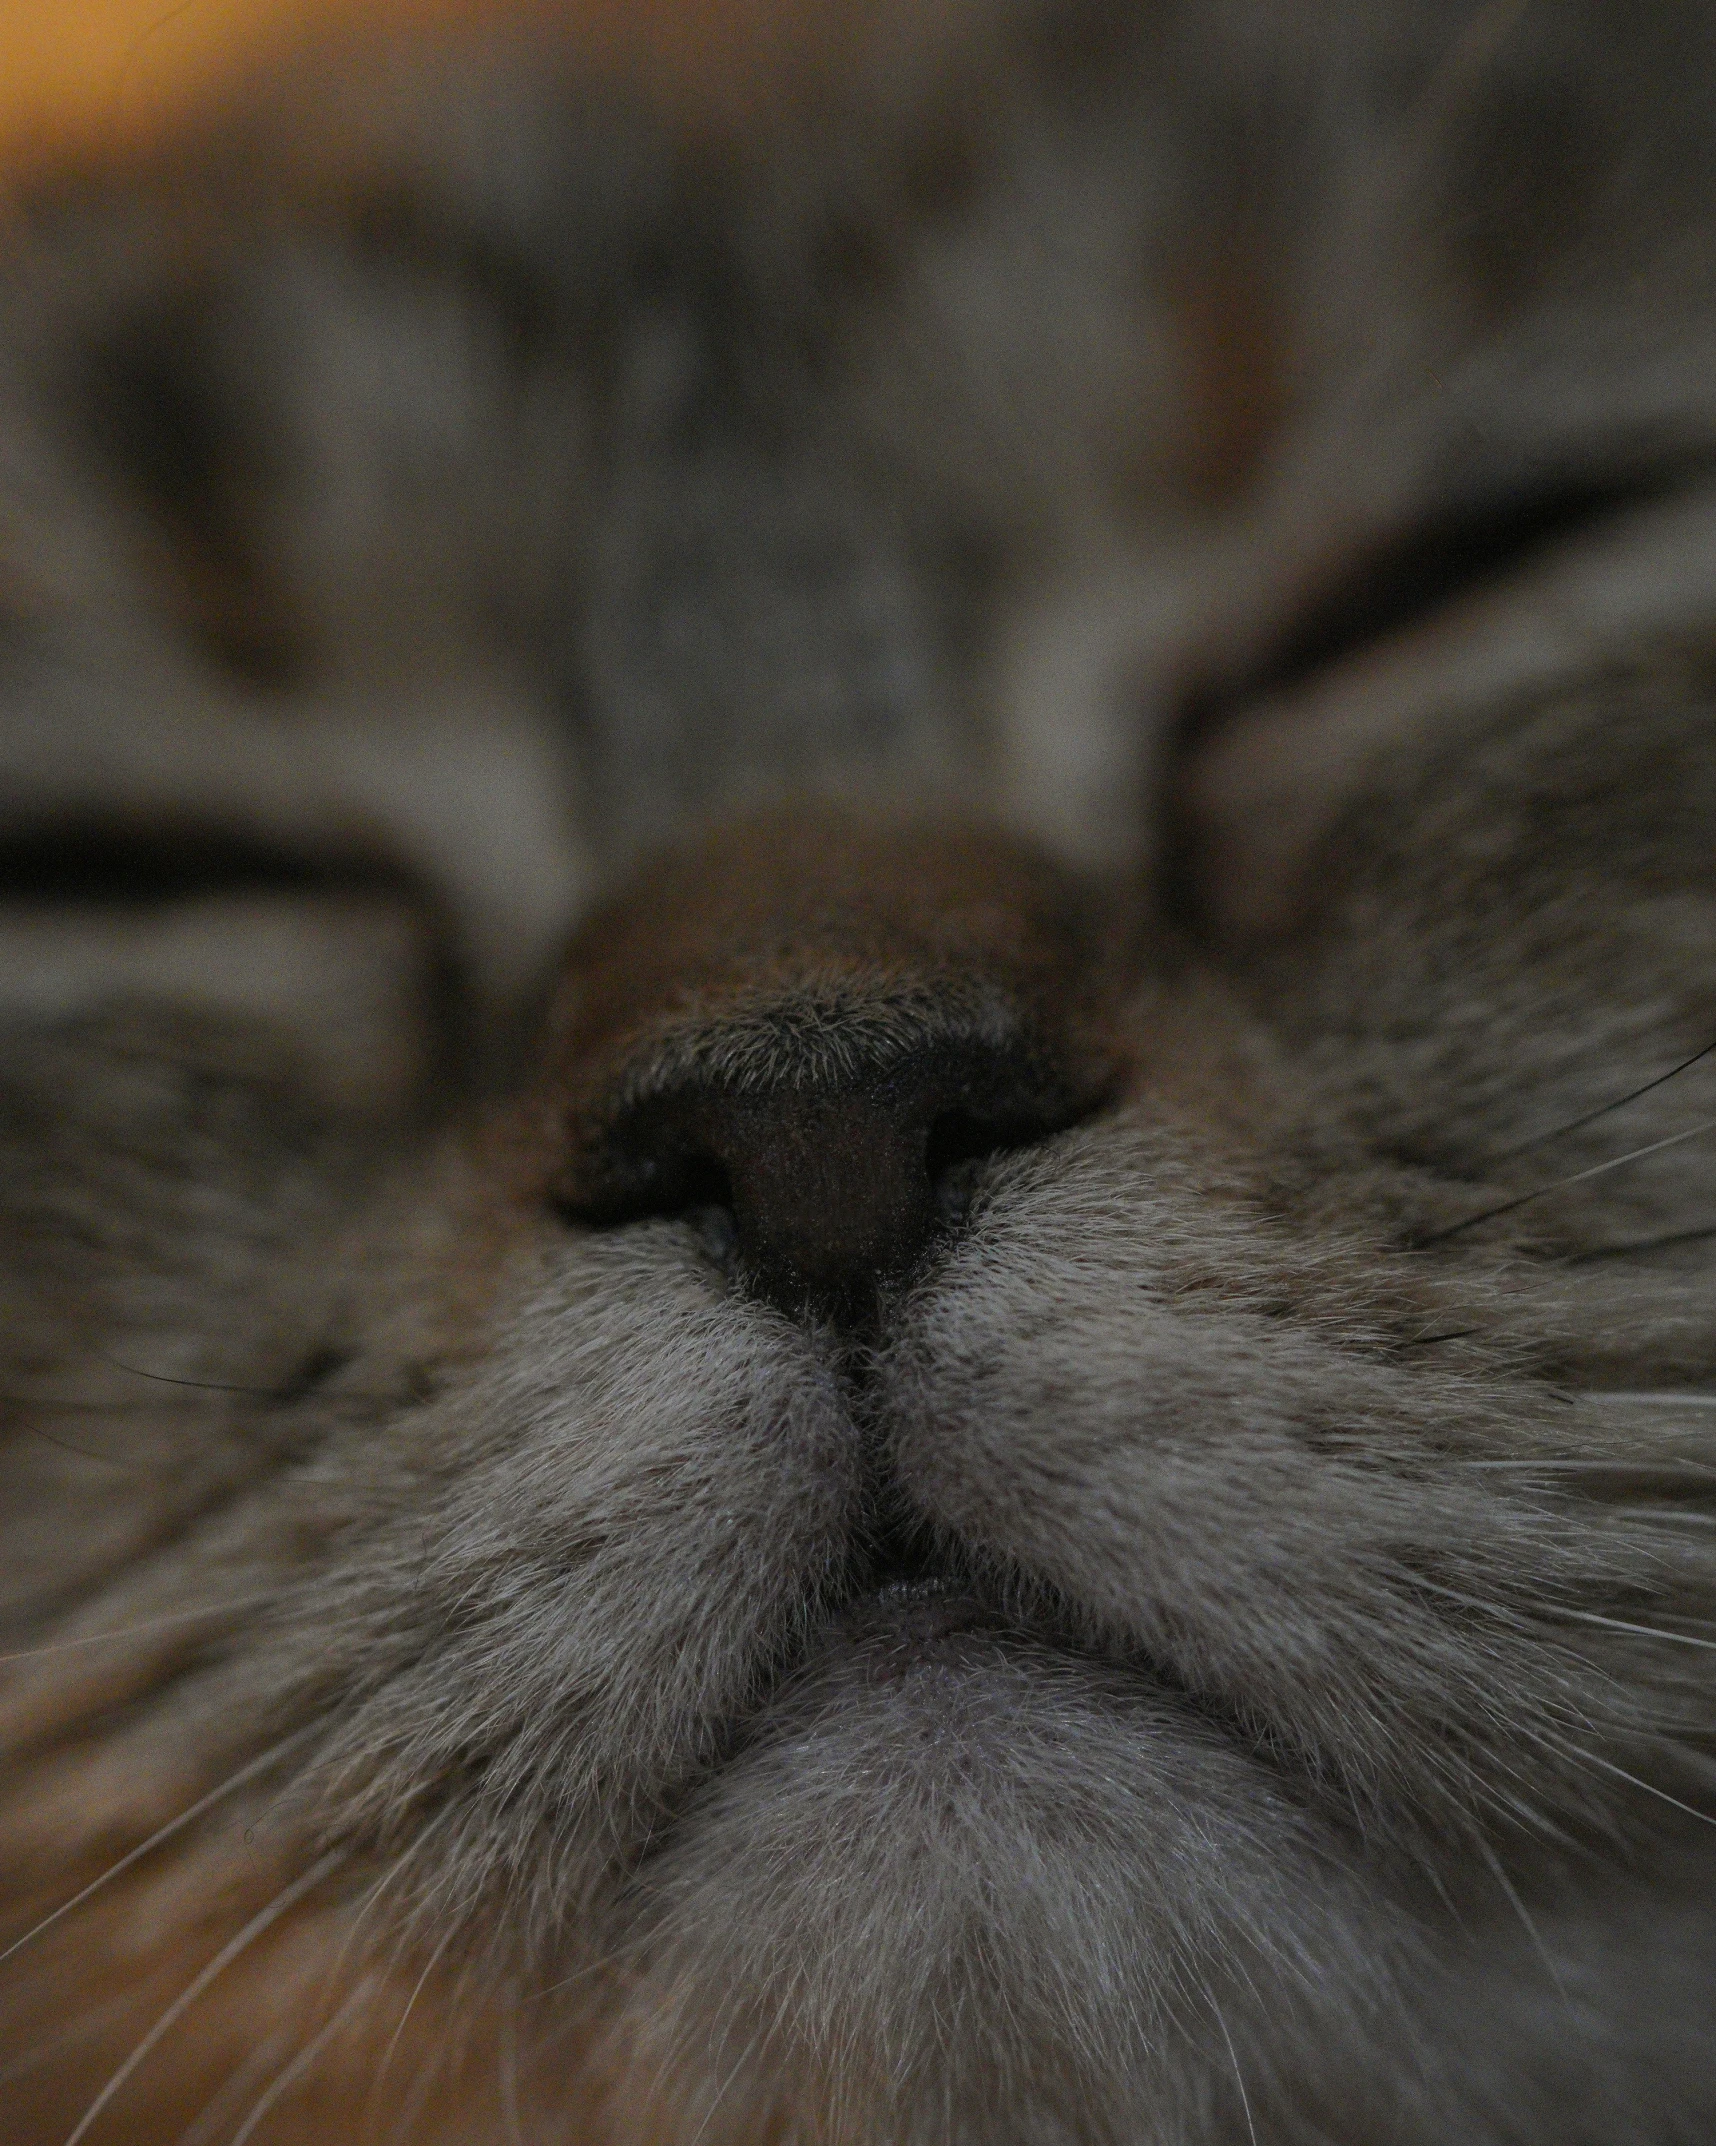 a grey cat's face has its eyes closed